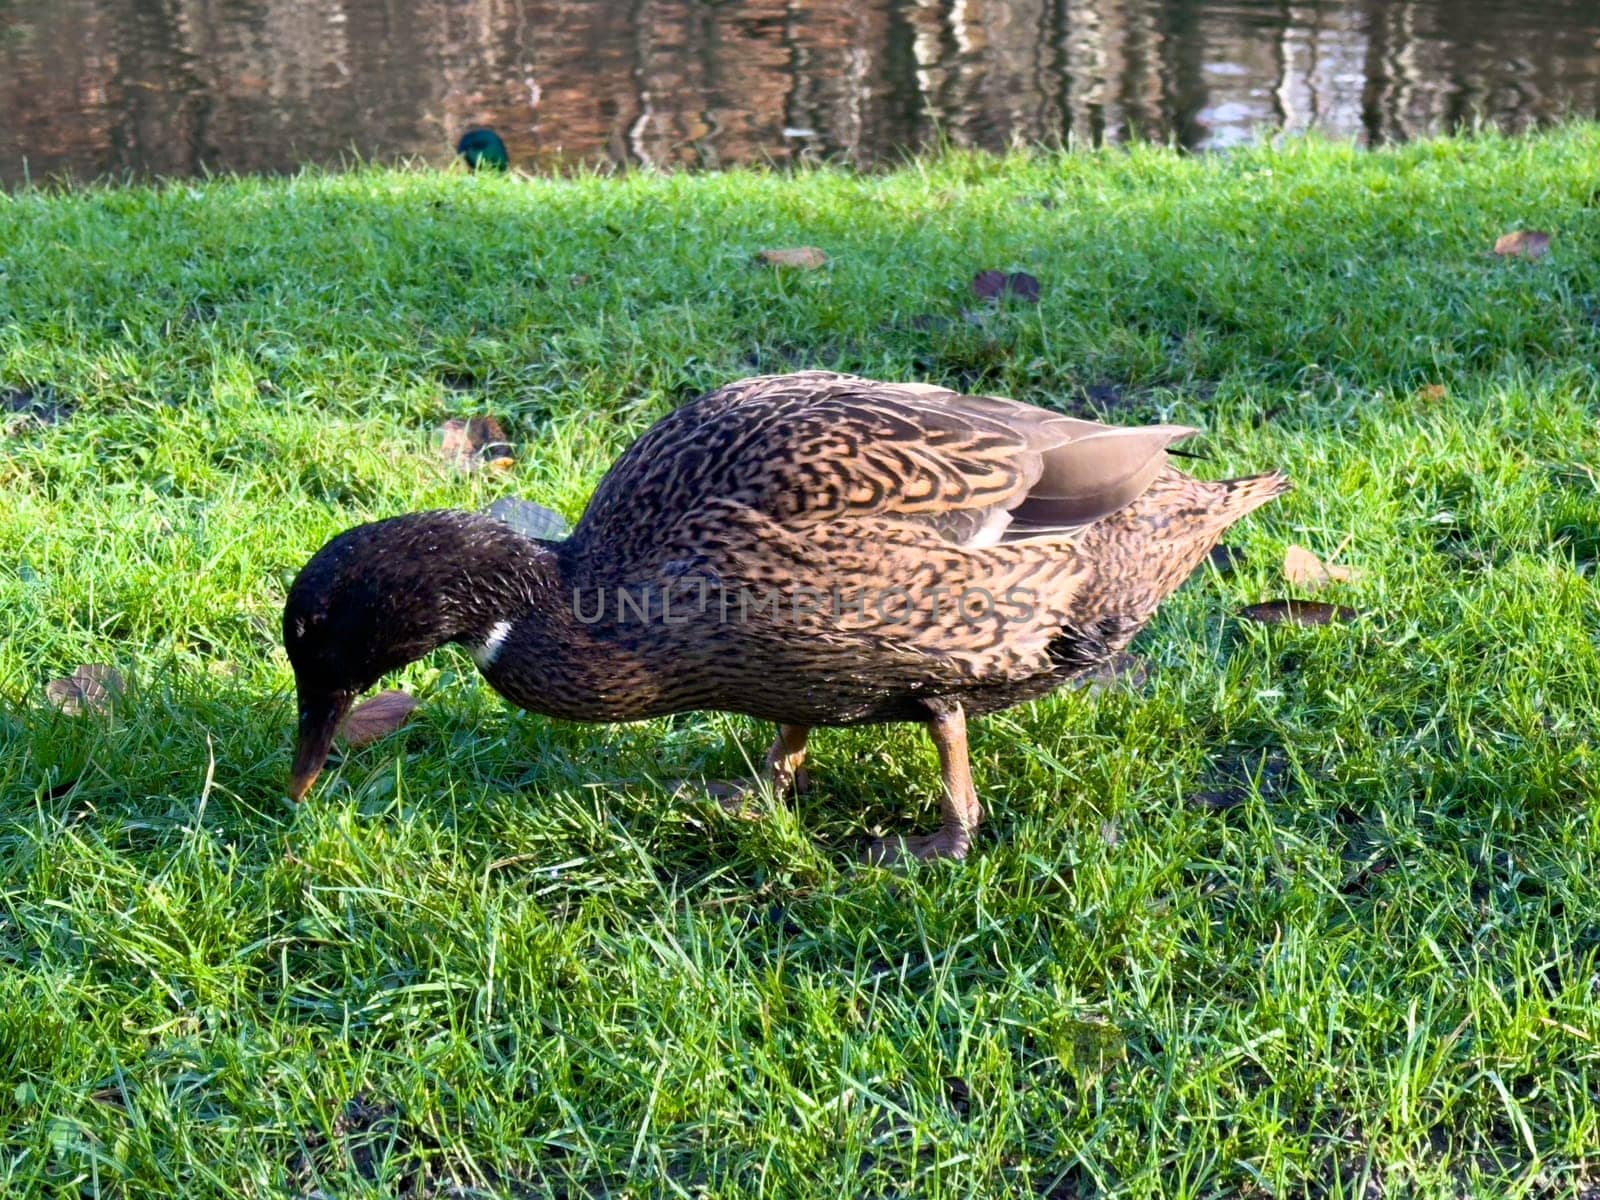 Europen mallard duck standing on the grass, next to the lake